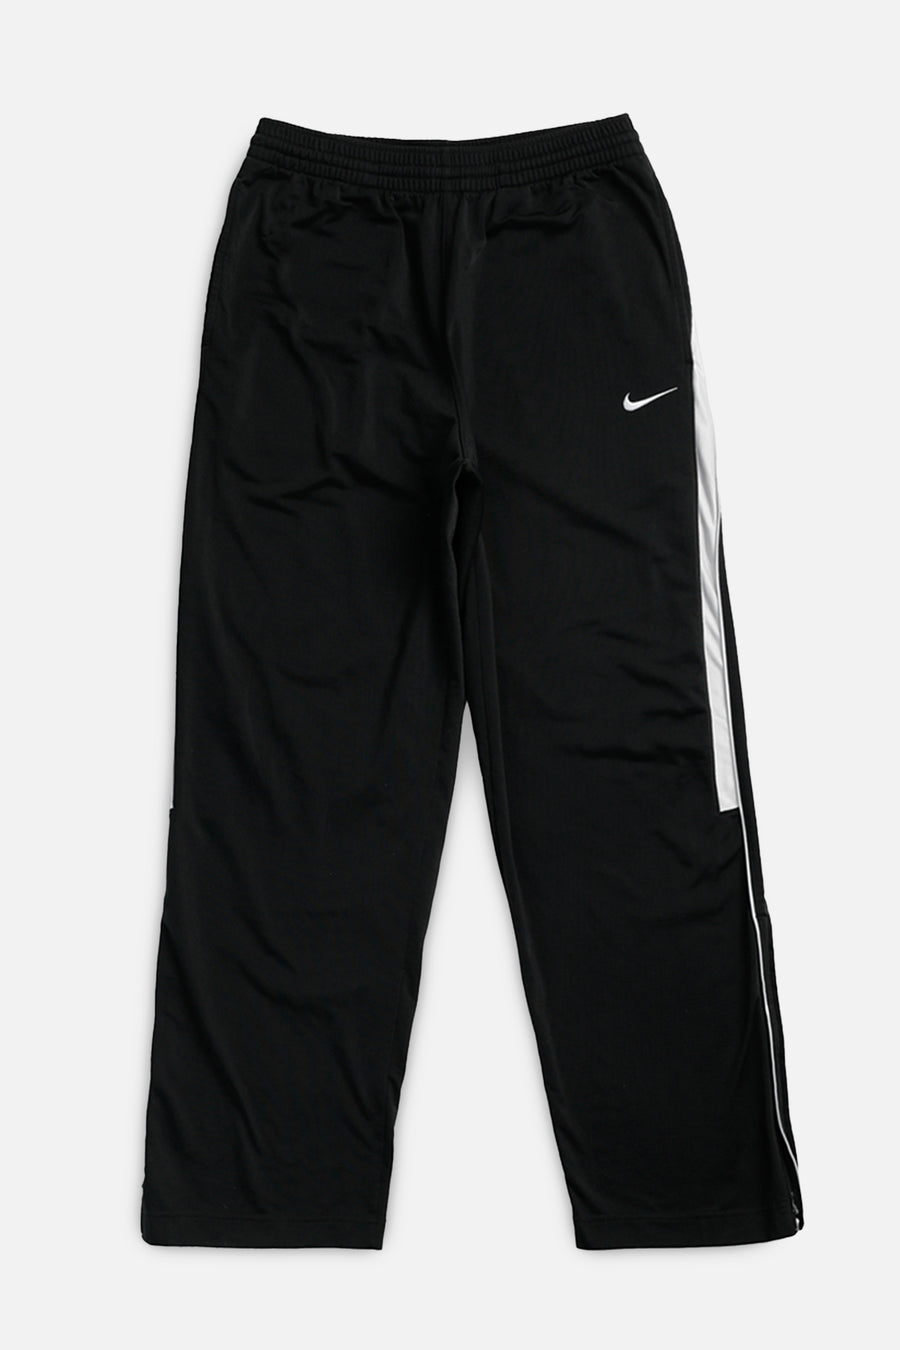 Vintage Nike Track Pants - M